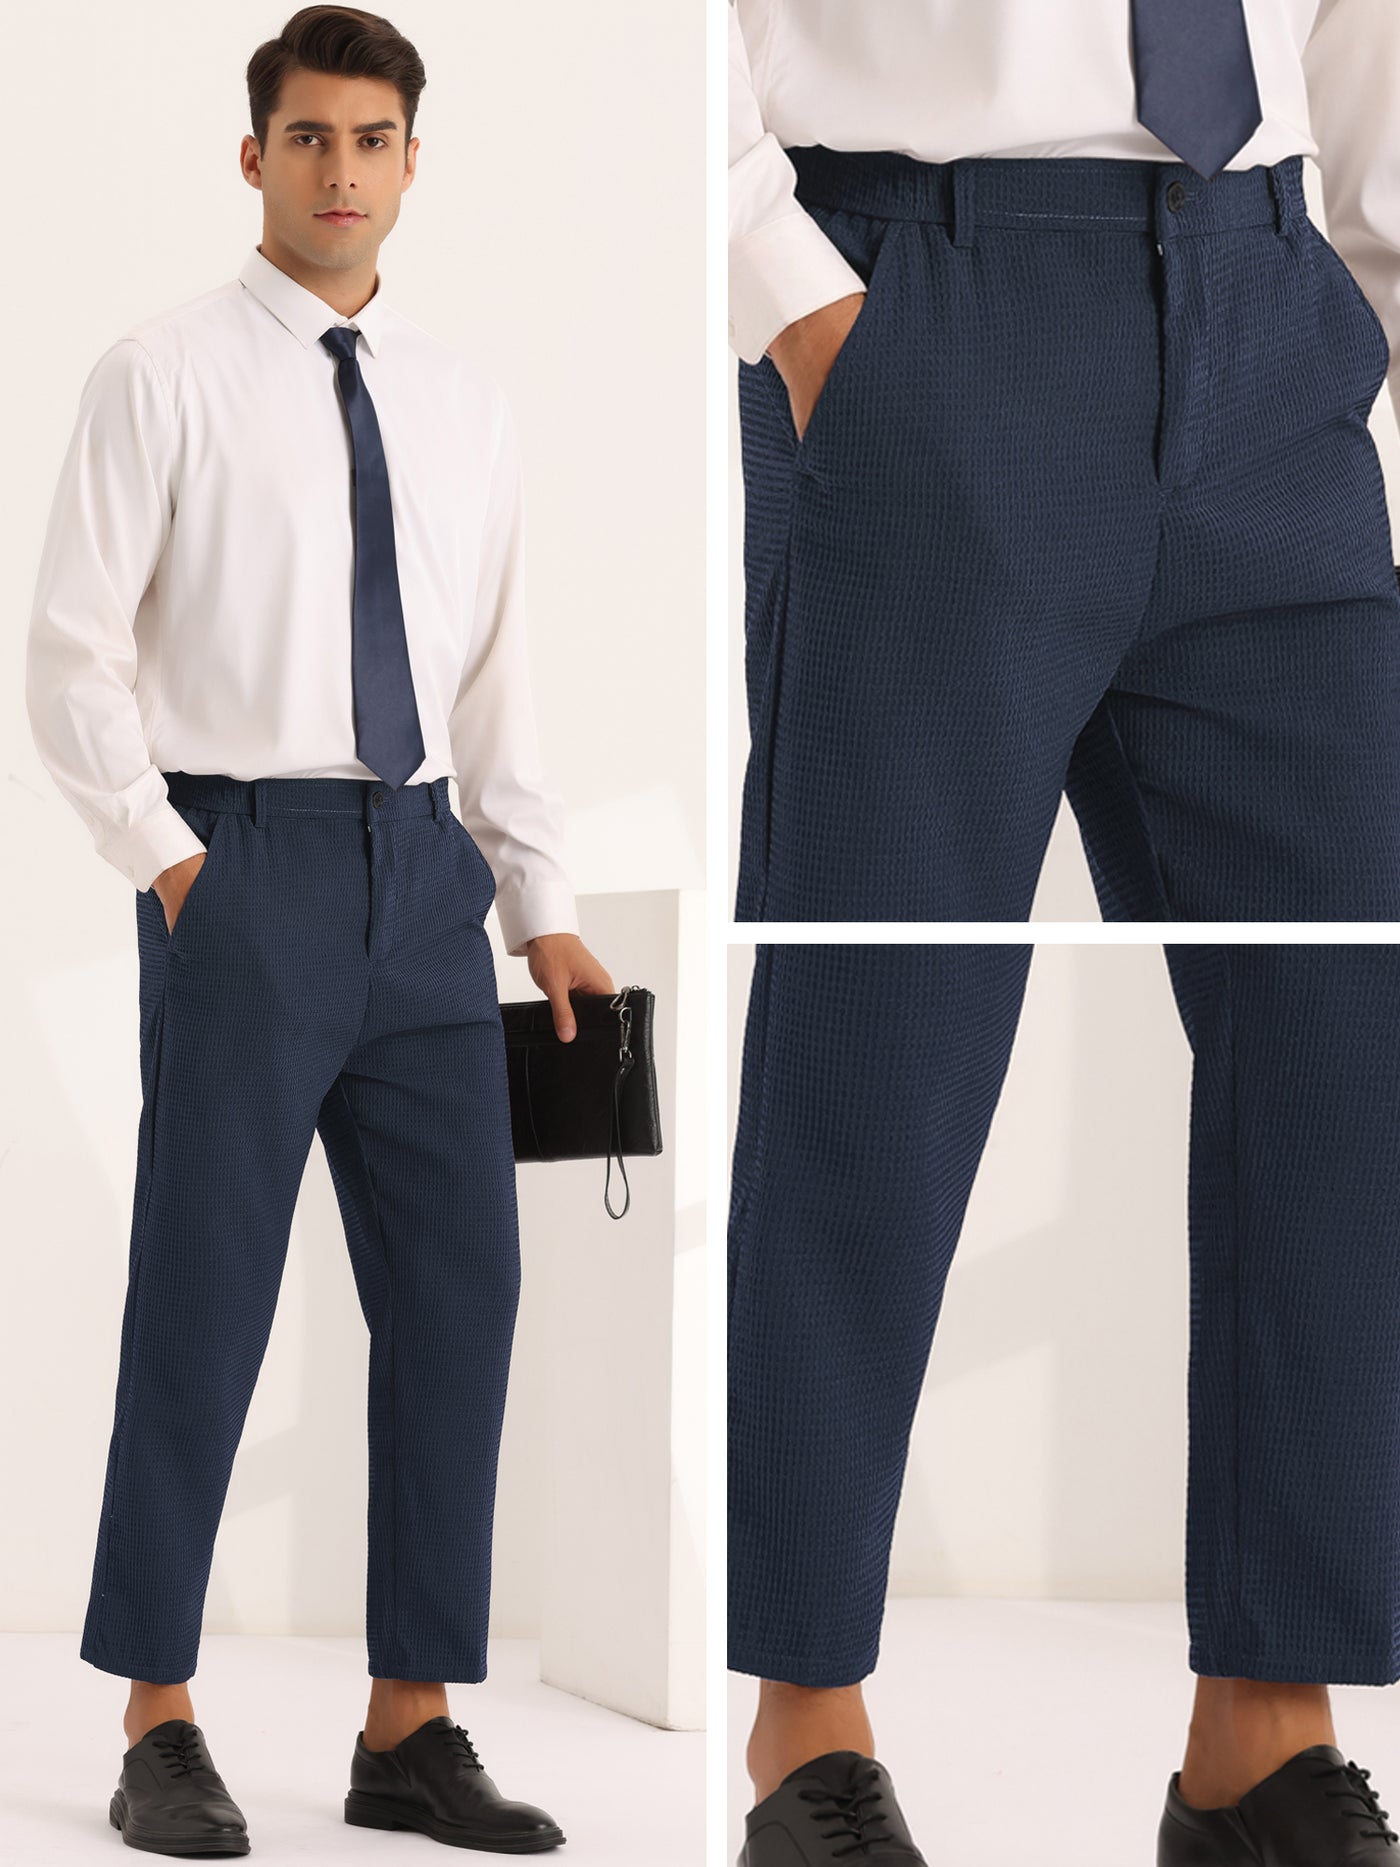 Bublédon Men's Solid Flat Front Waffle Ankle Length Dress Pants